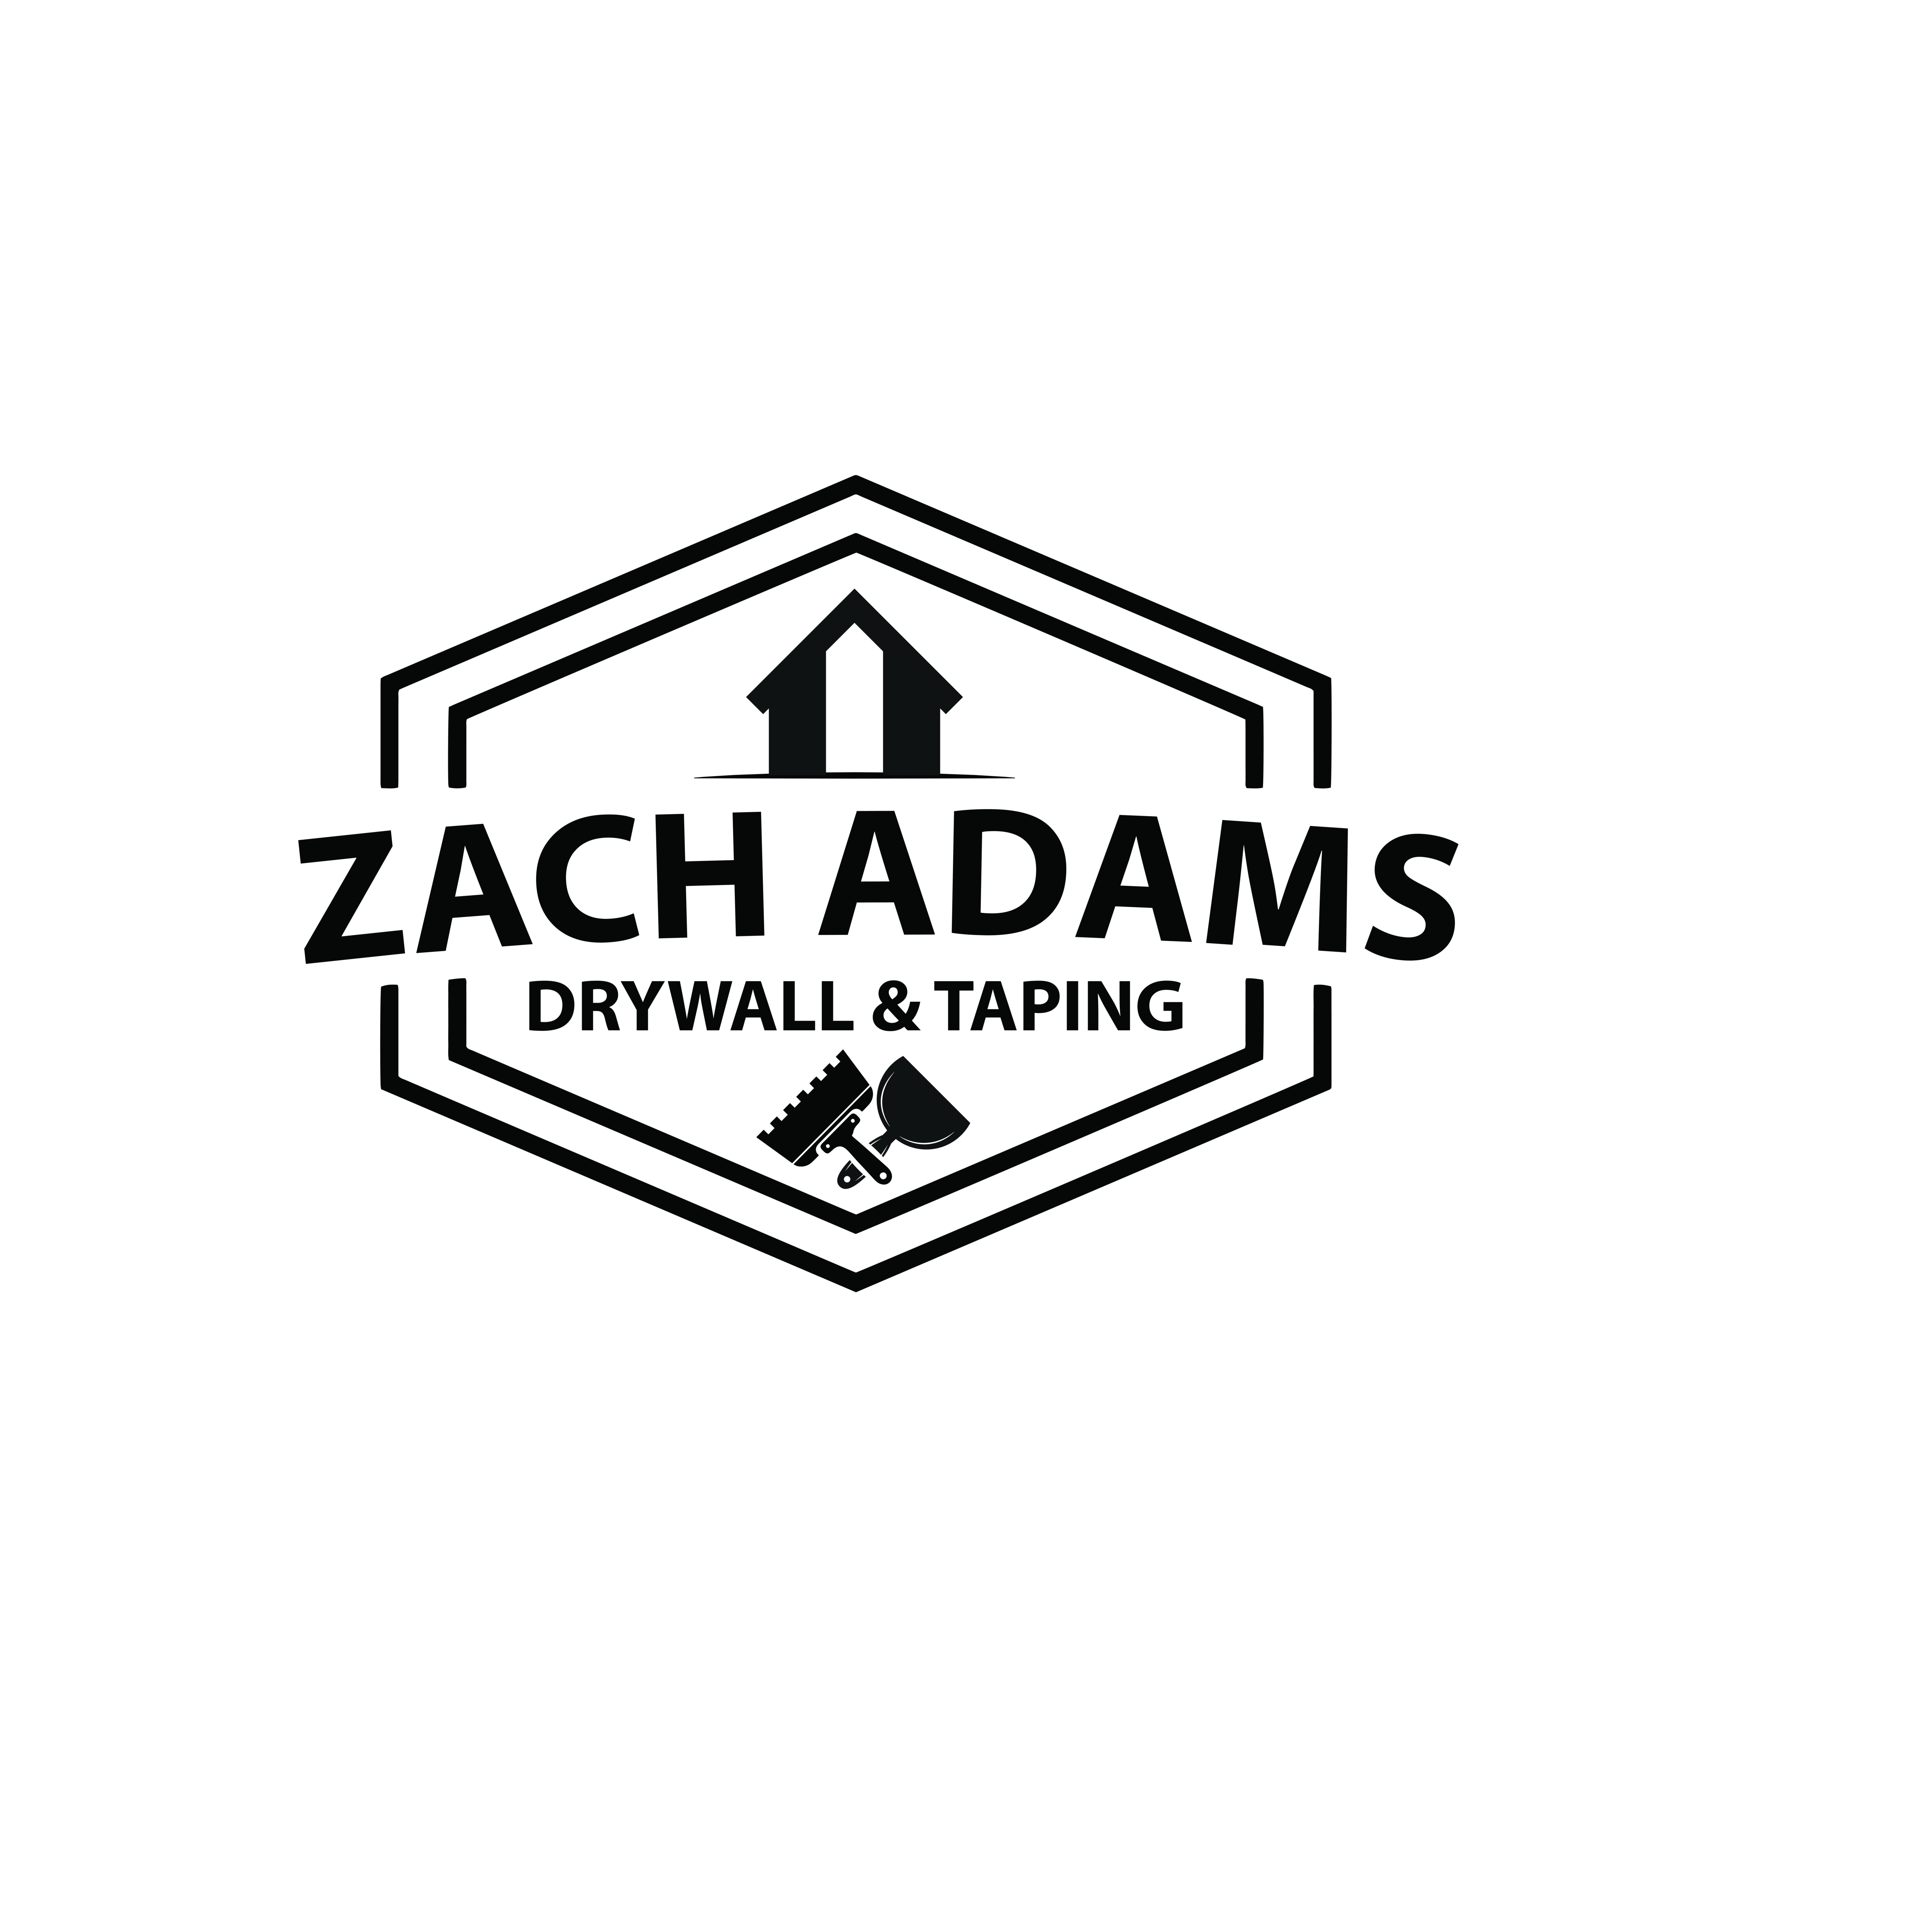 Zach Adams Drywall & Taping